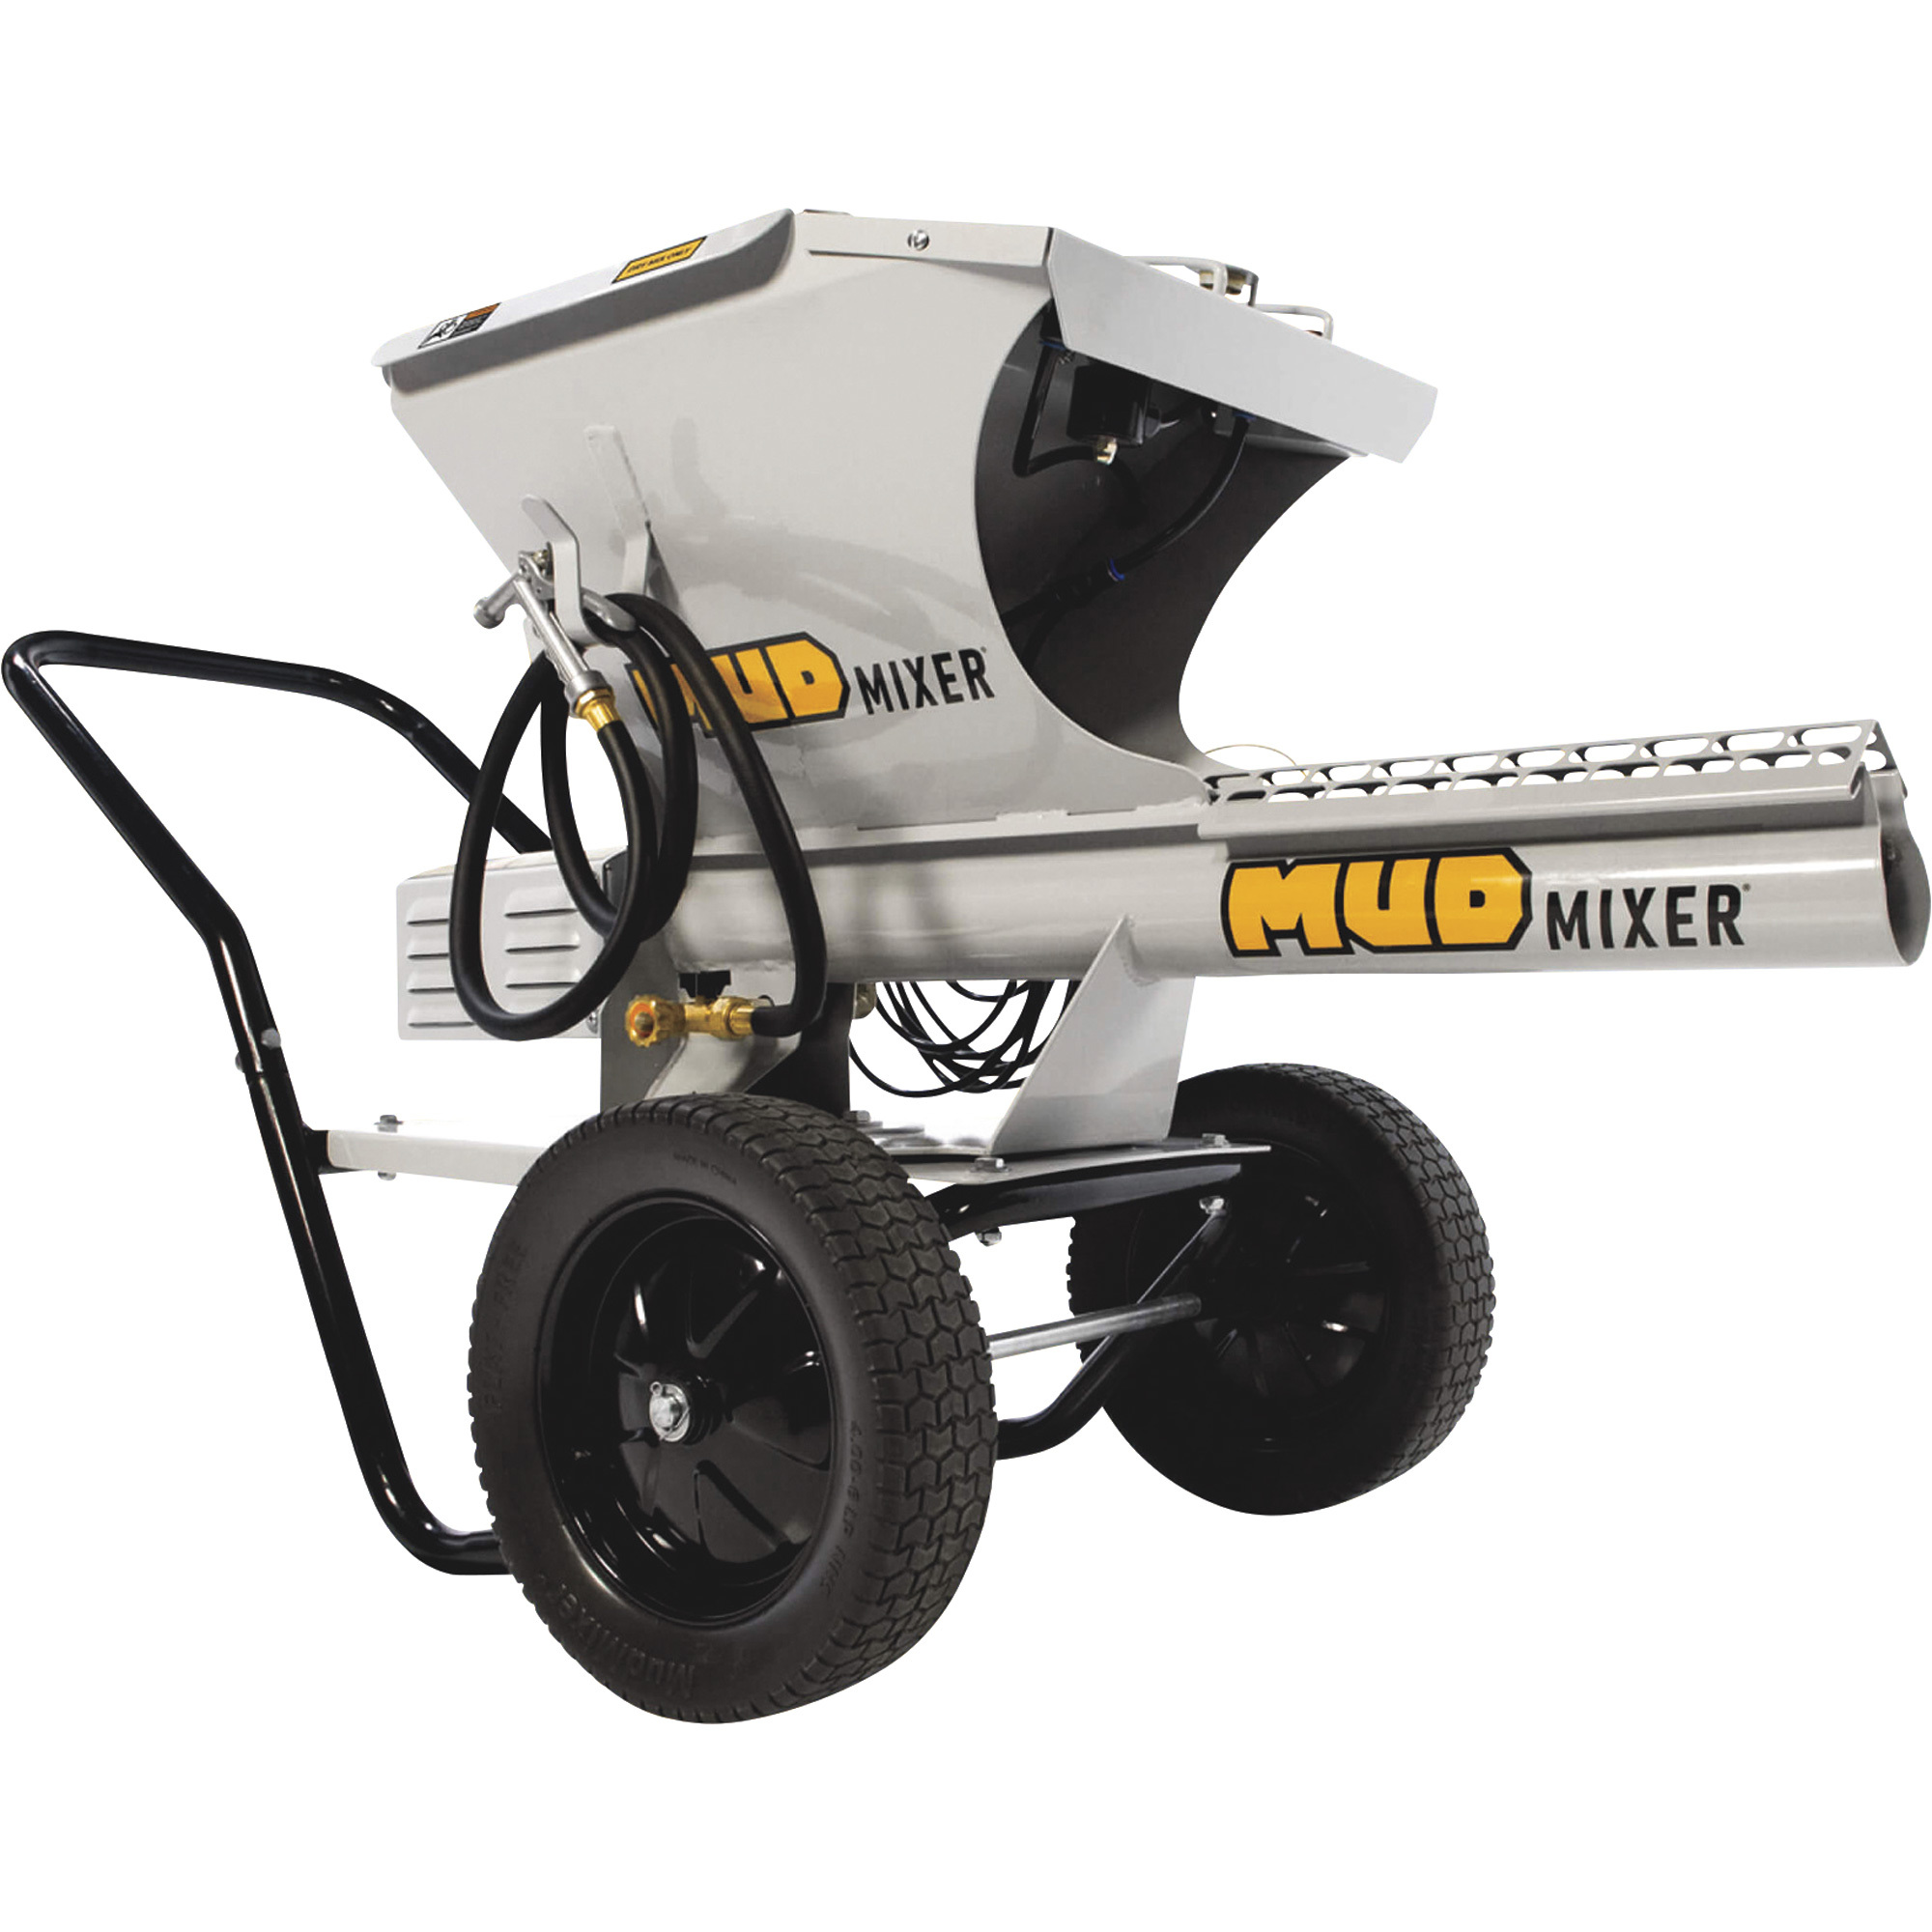 Mud Mixer Cement Mixer â 120-Lb. Hopper Capacity, Model MMXR-3221